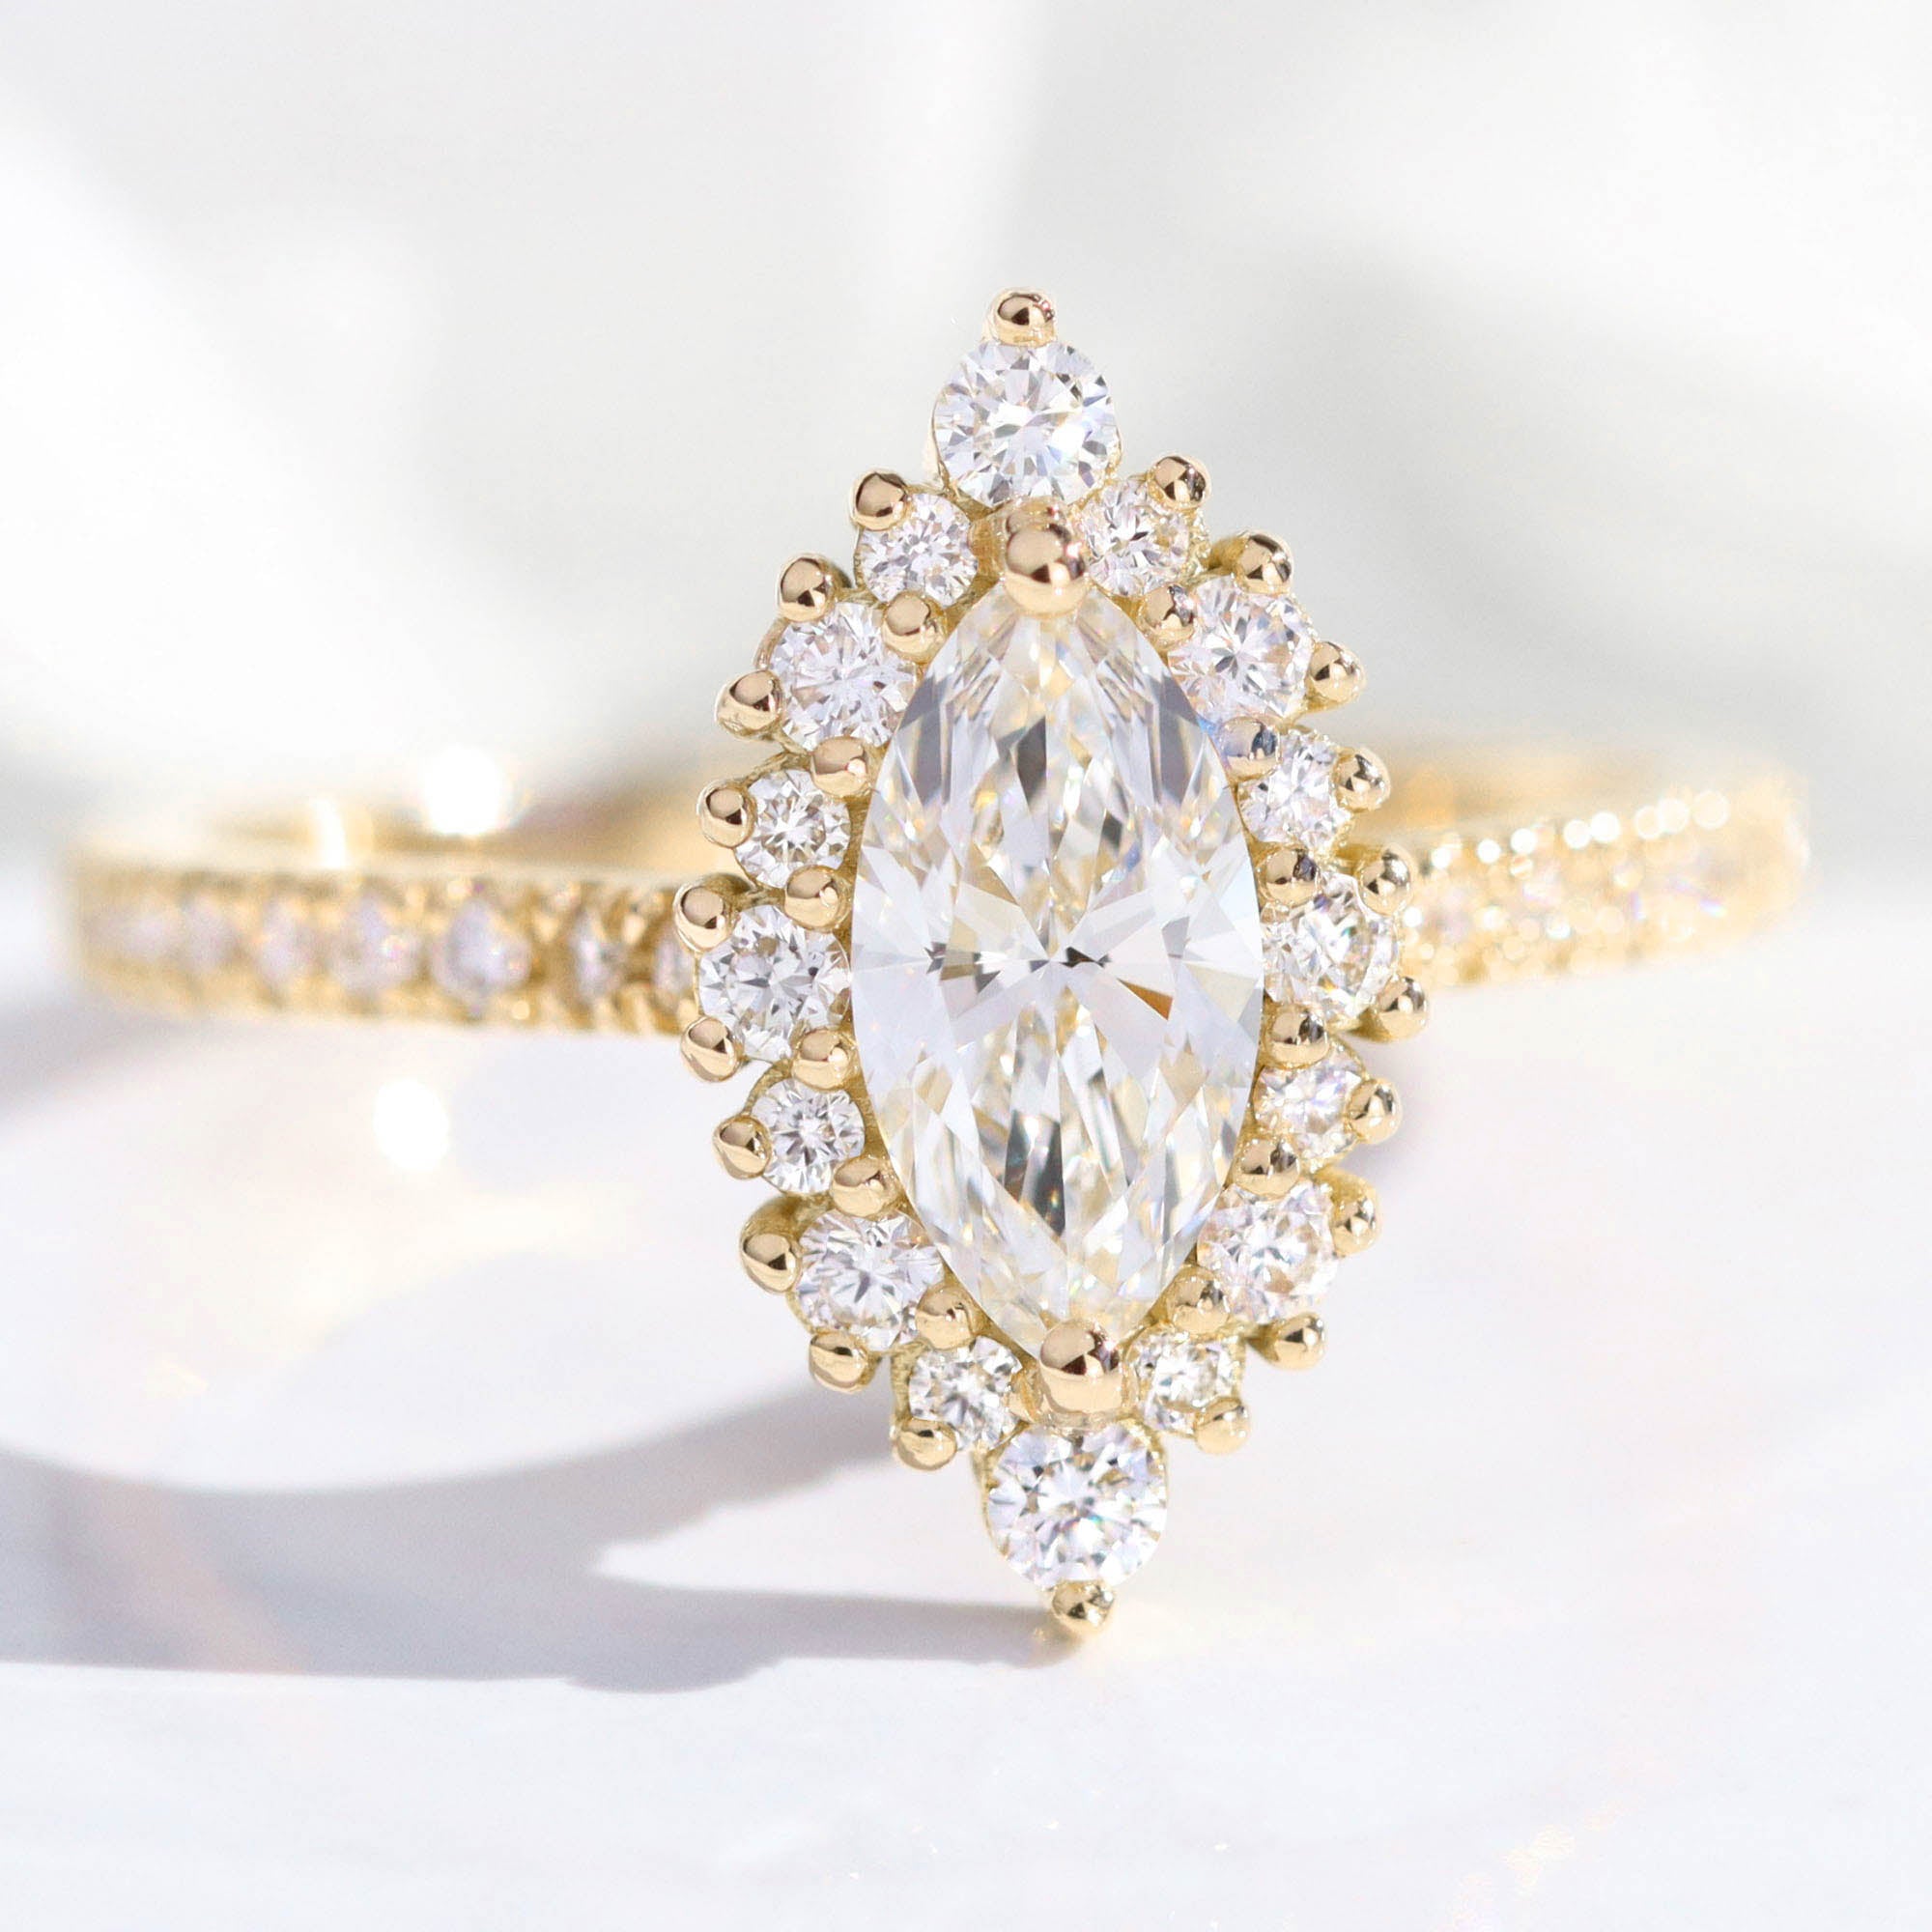 lab diamond ring yellow gold marquise diamond halo engagement ring La More Design Jewelry